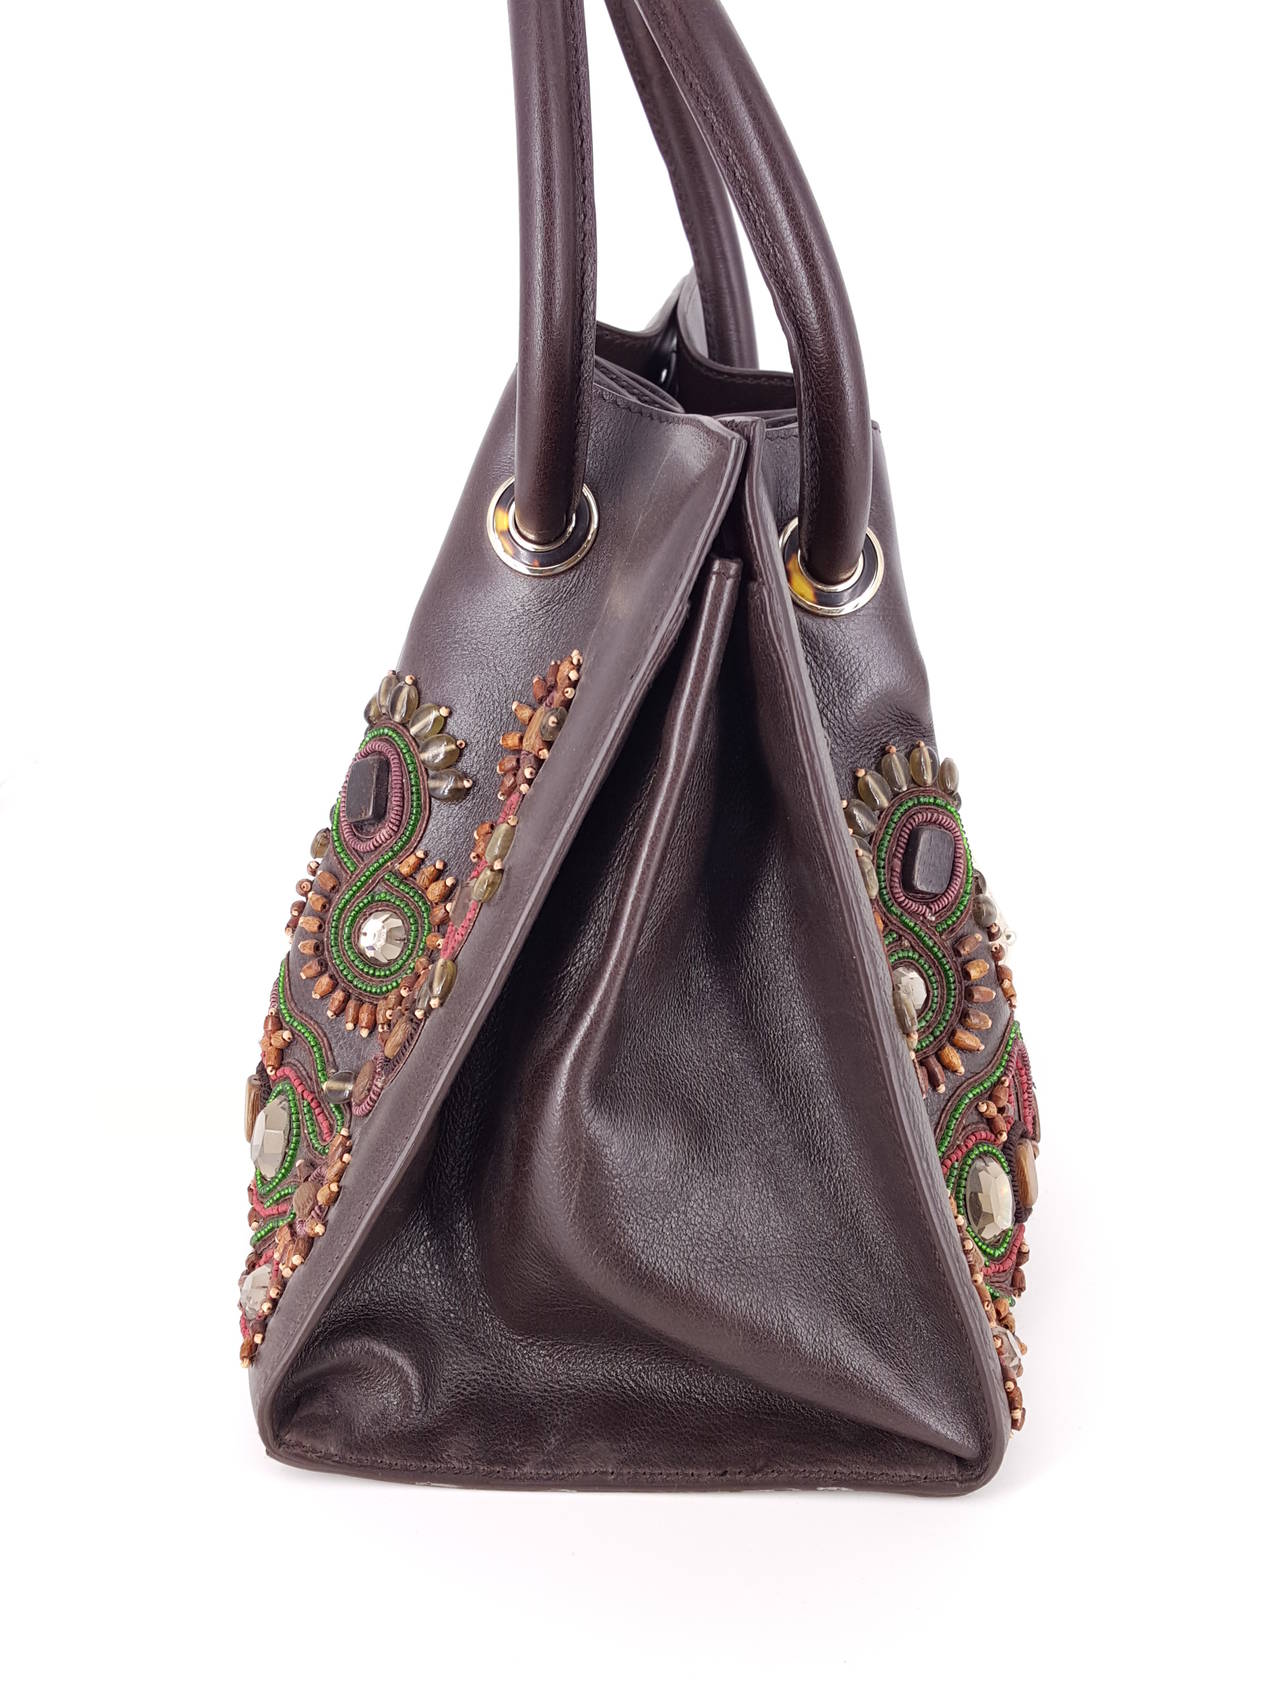 Oscar De La Renta Brown Top Handle Bag With Stone Embellishments In New Condition For Sale In Delray Beach, FL